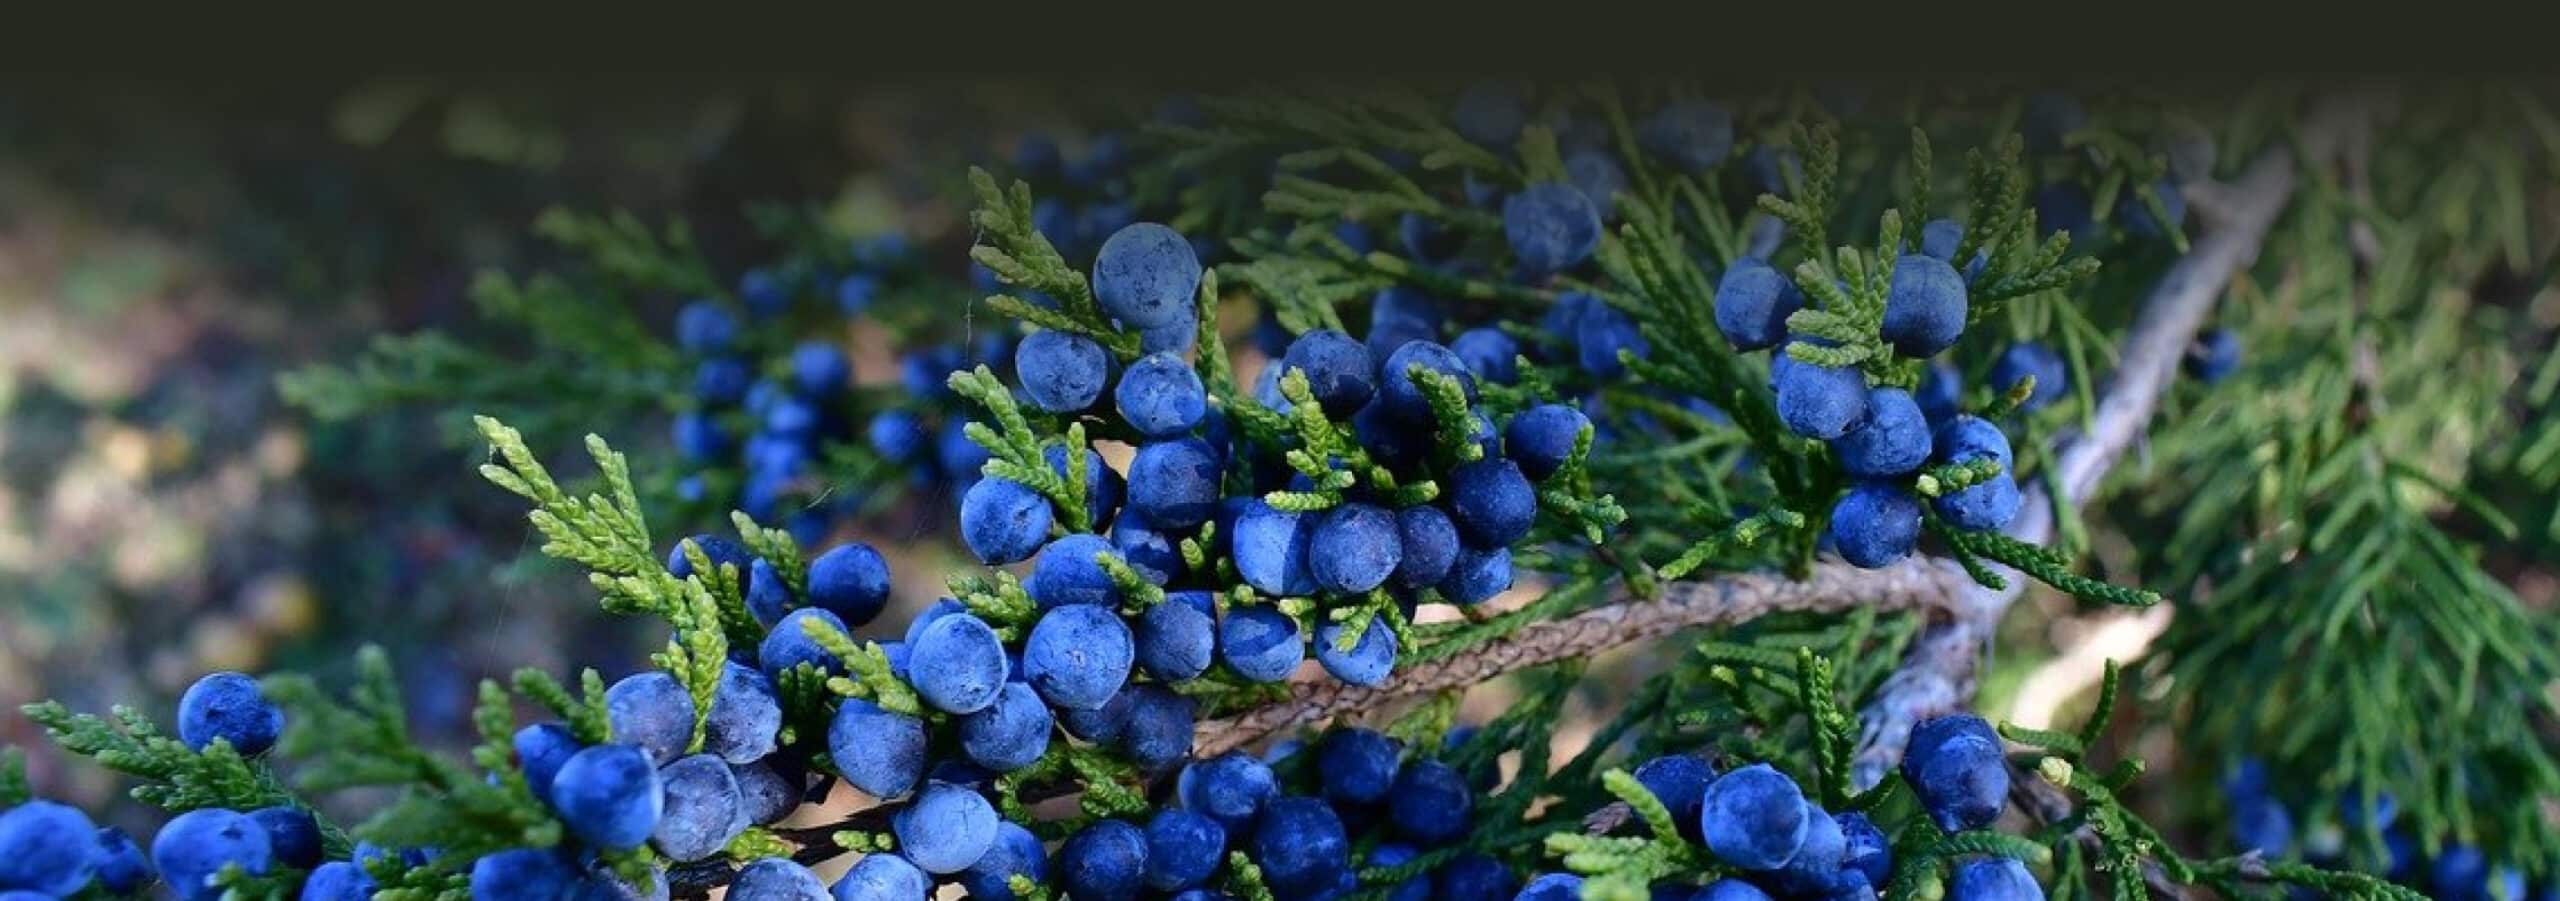 Blue berries on a pine shrub close up